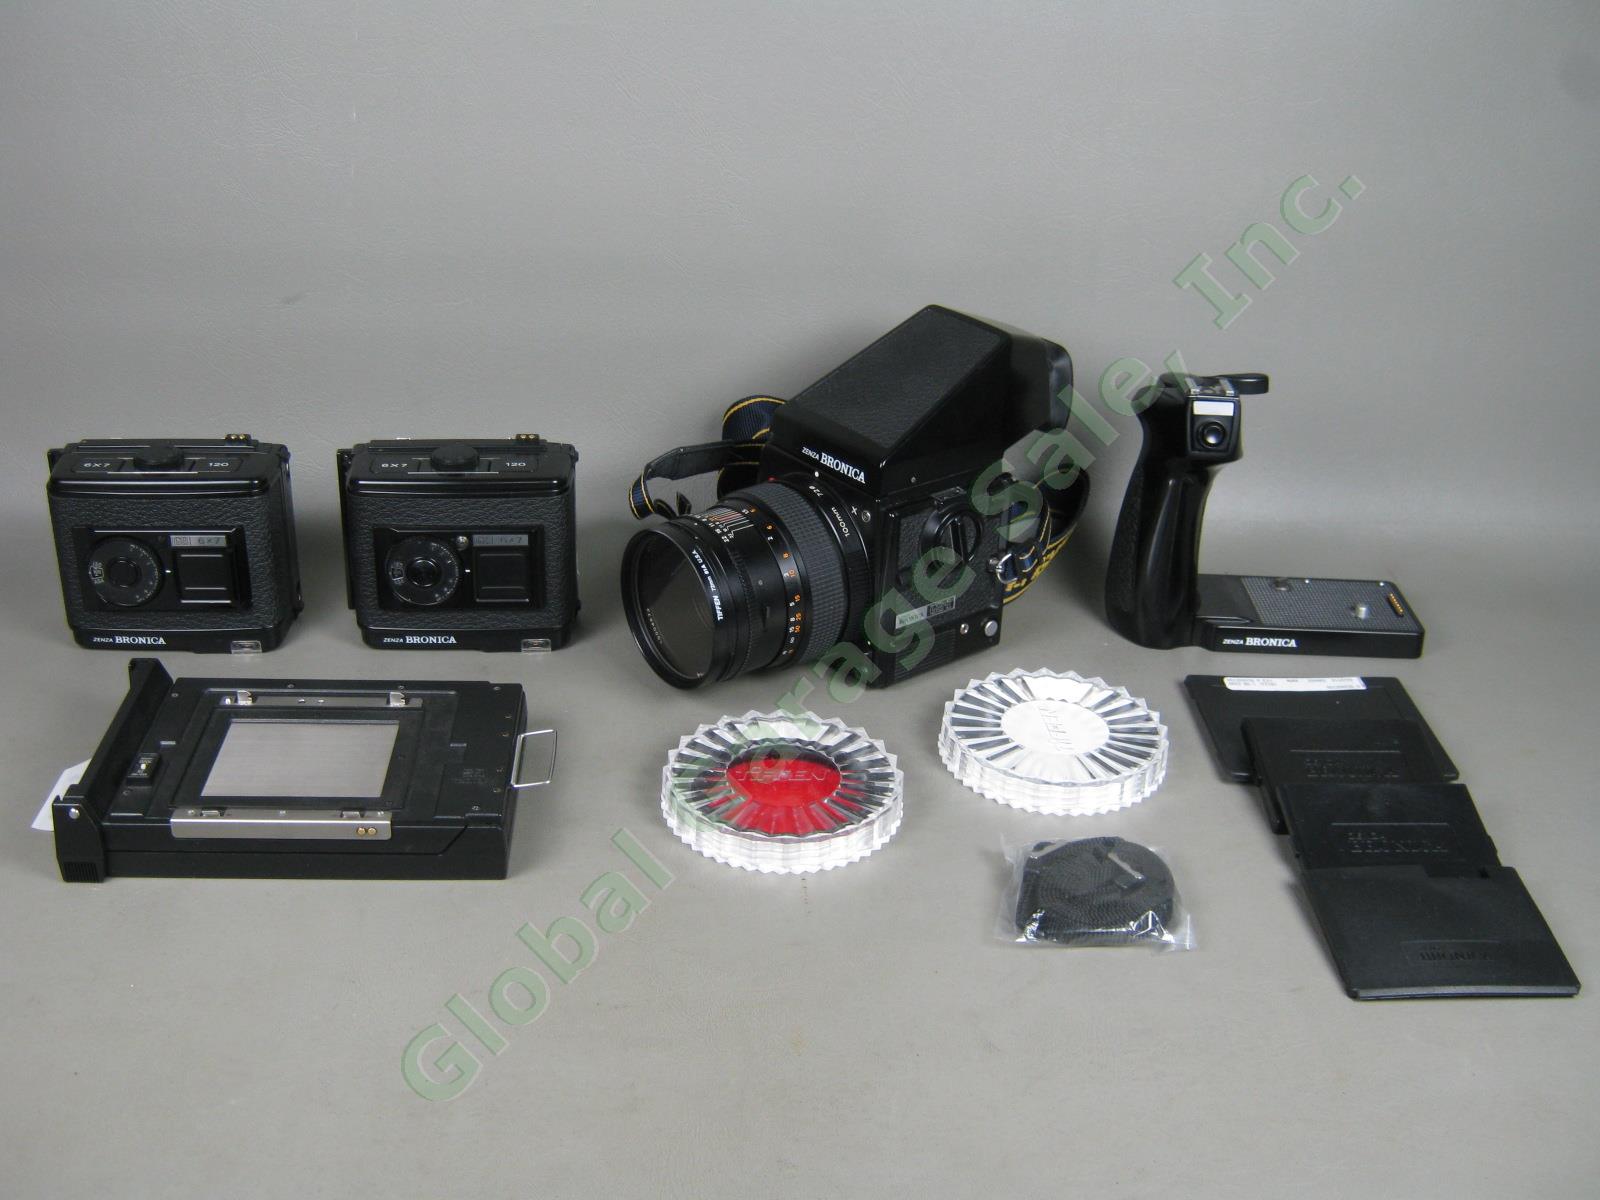 Bronica GS-1 6x7 Medium Format Camera Zenzanon-PG 100mm Lens Backs Grip Bundle